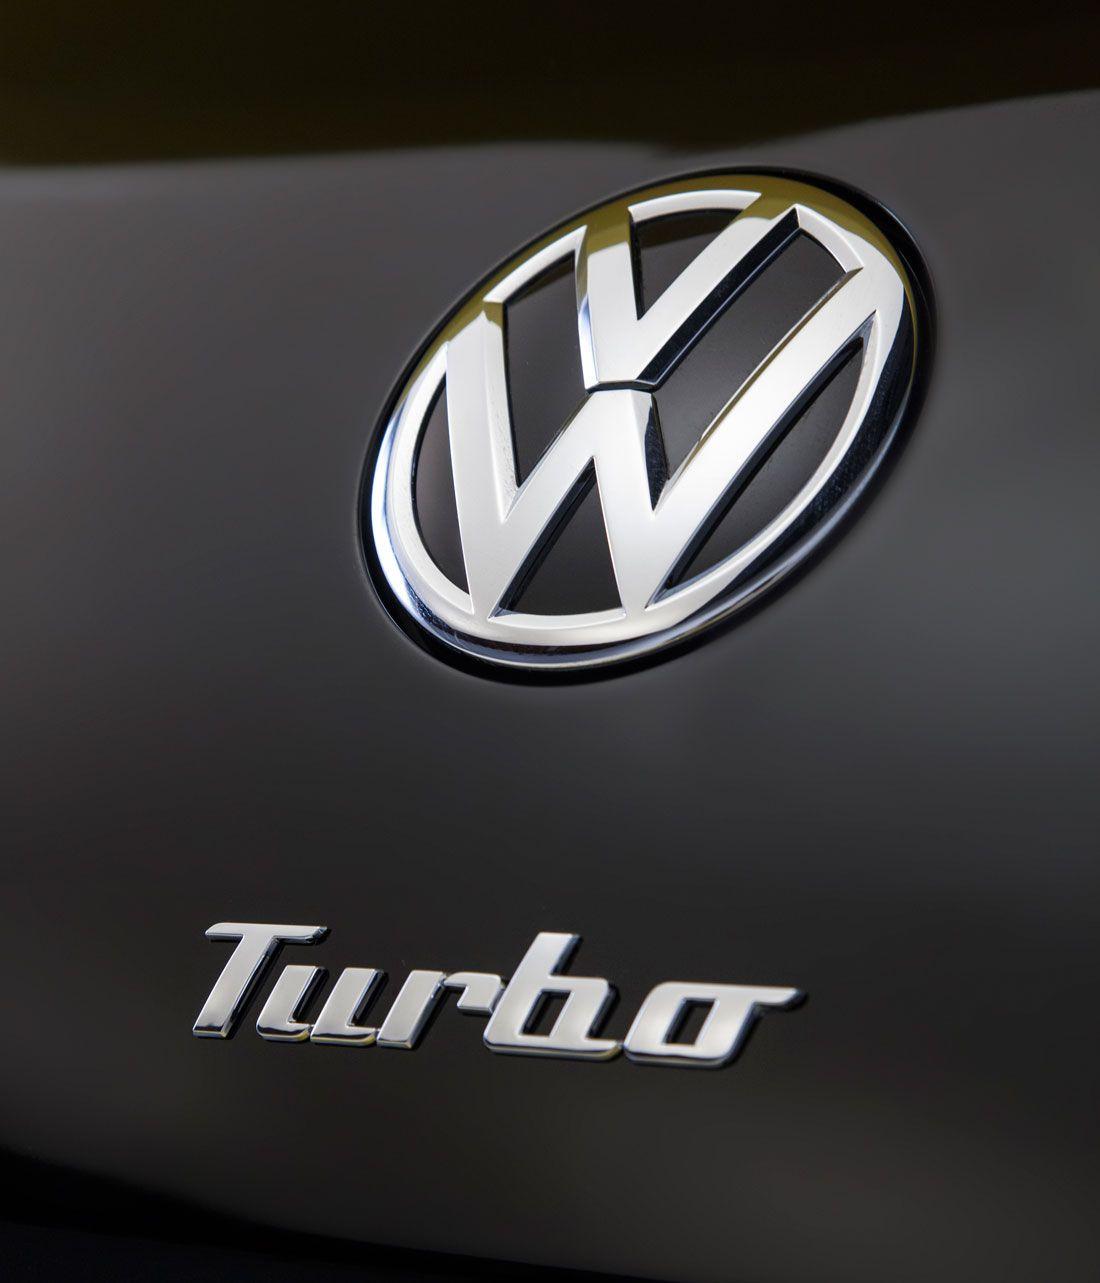 VW Turbo Logo - Volkswagen related emblems | Cartype